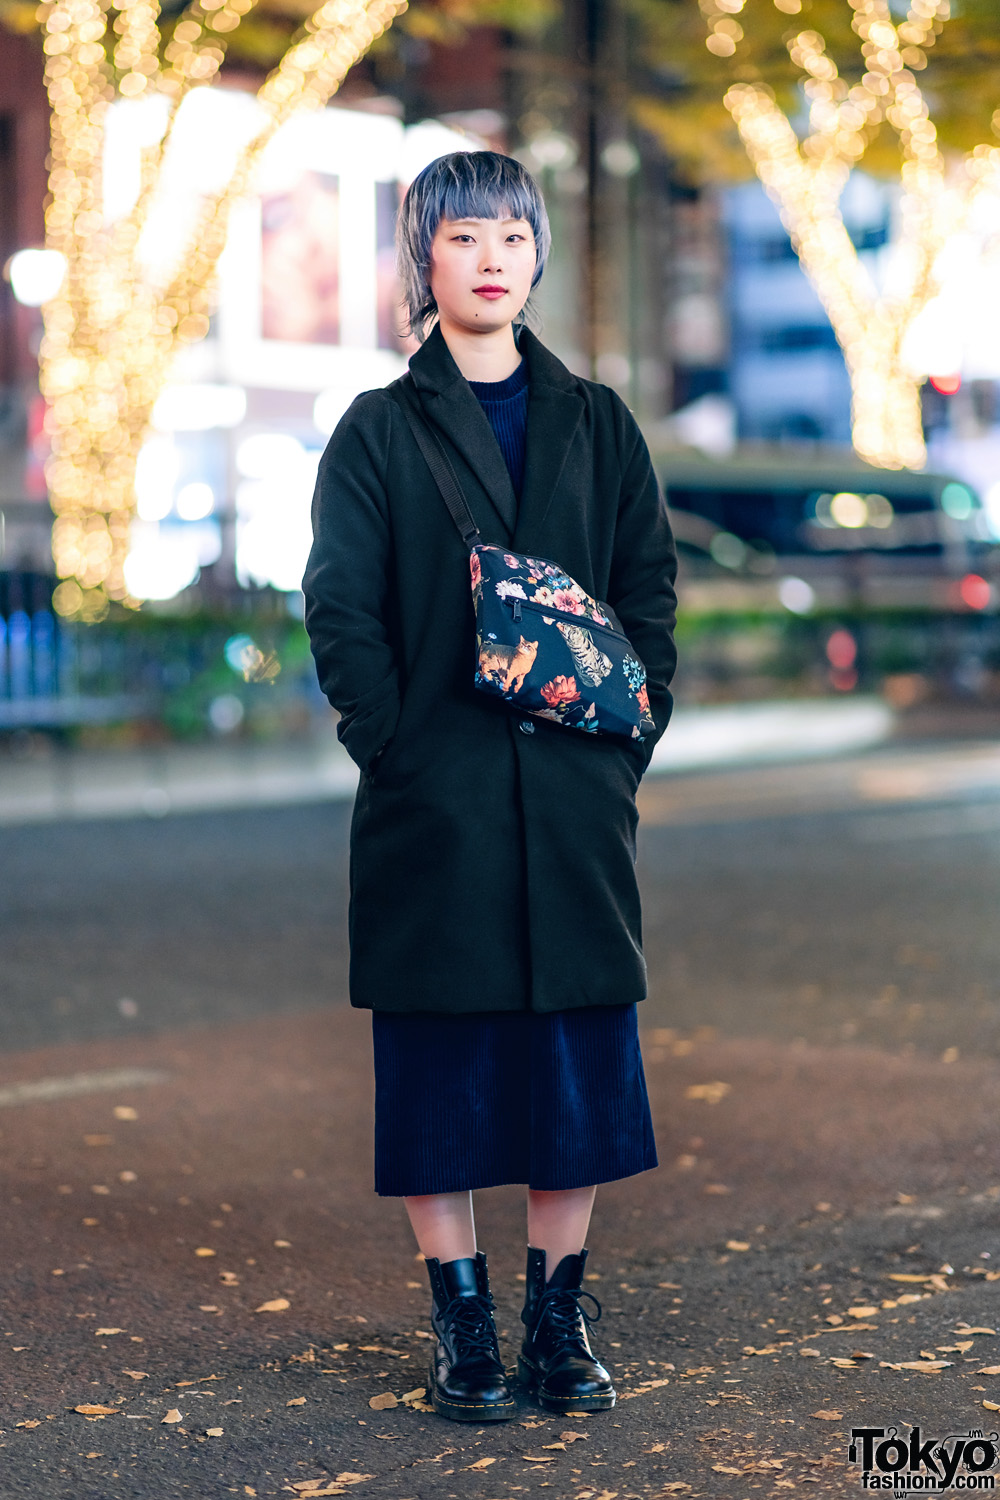 Tokyo Monochrome Fashion w/ &ellecy Floral Bag & Dr. Martens Boots